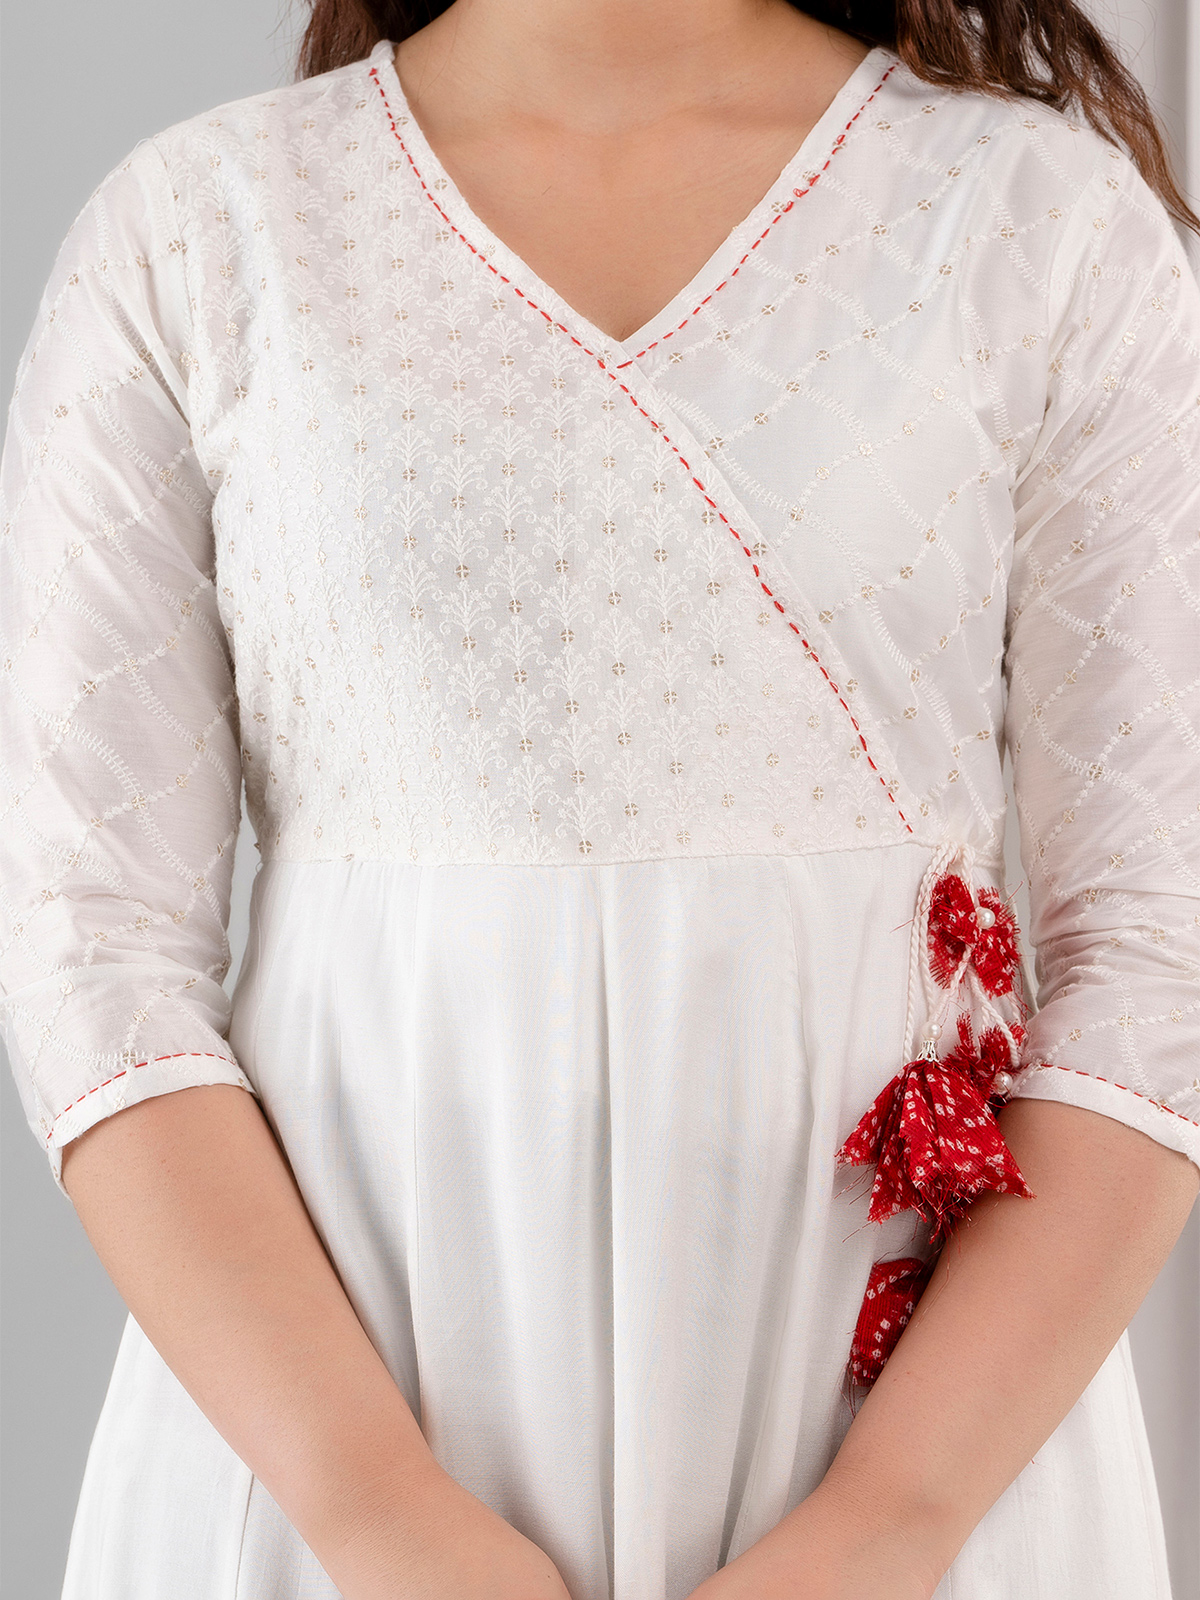 Indian Ethnic Lukhnavi White/off White Kurti With Multi Embroidery Size  45/46 | eBay